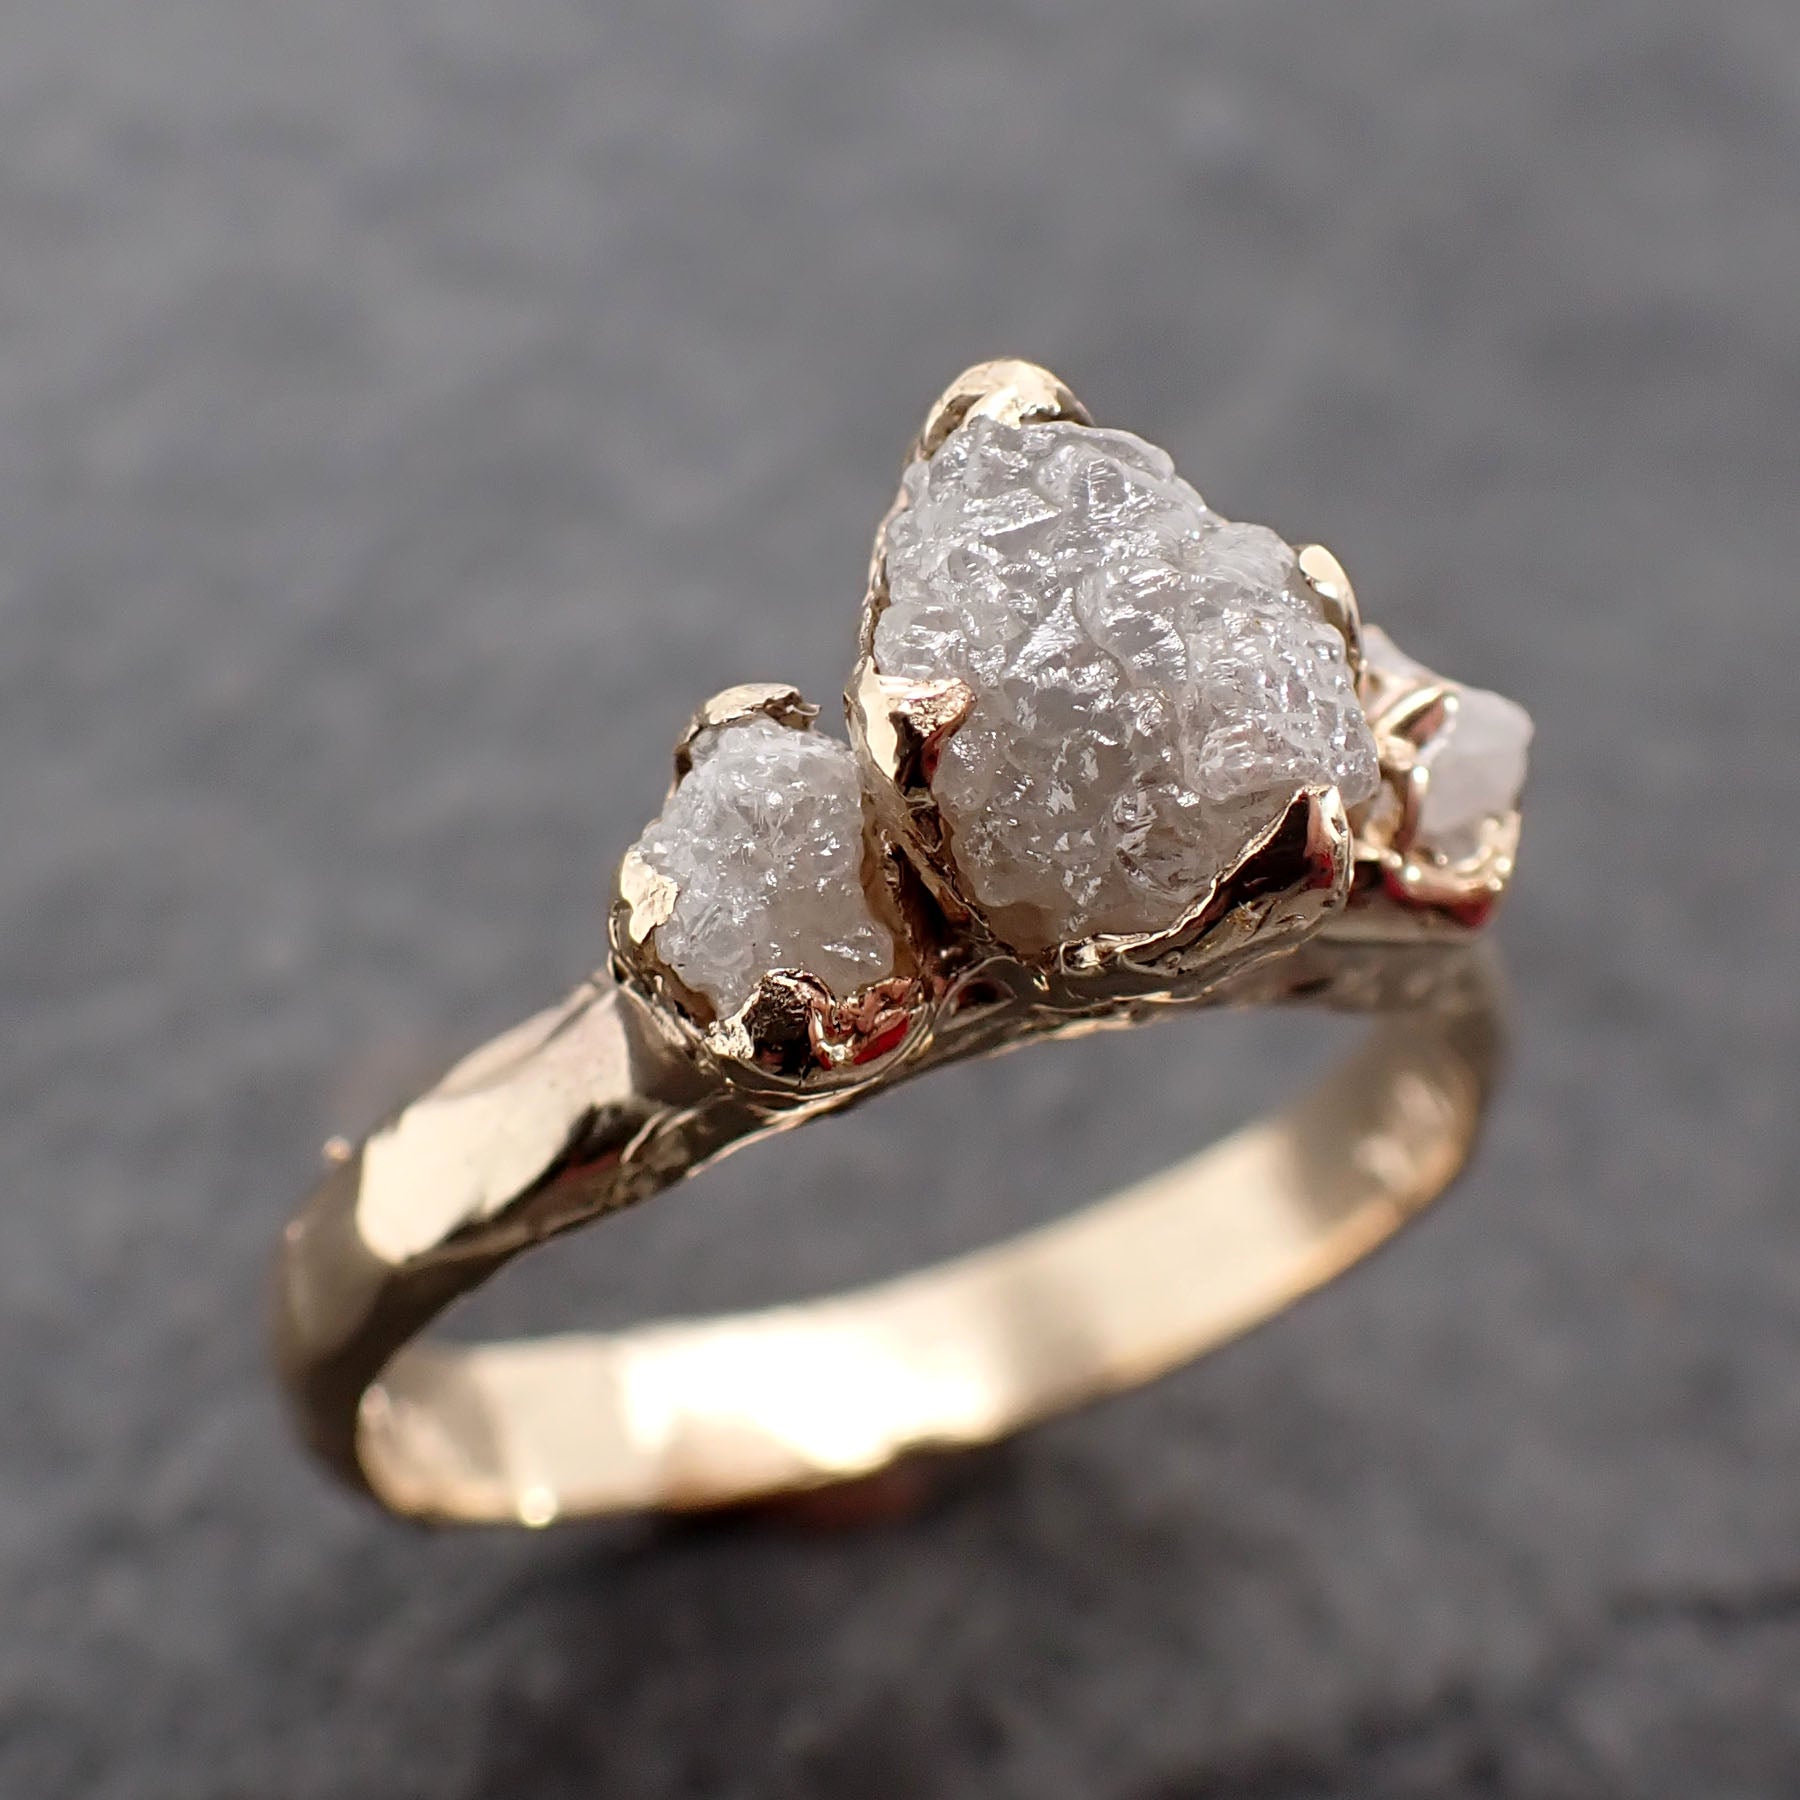 raw rough diamond engagement stacking multi stone wedding anniversary 14k gold ring rustic 2495 Alternative Engagement